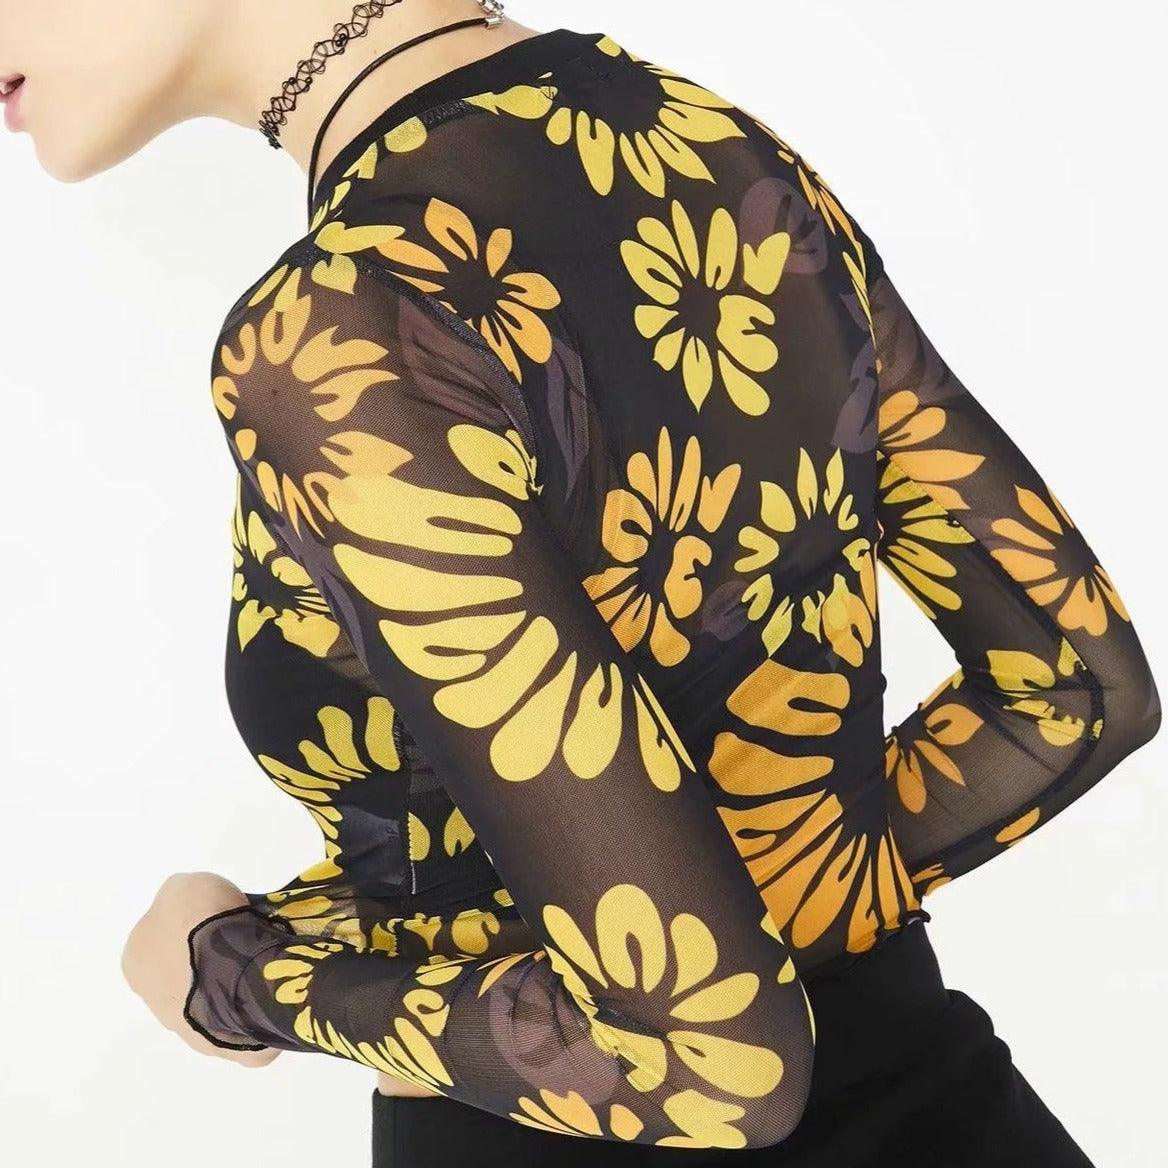 Hot Fashionista Jayda Allover Sunflower Print Sheer Crop Top